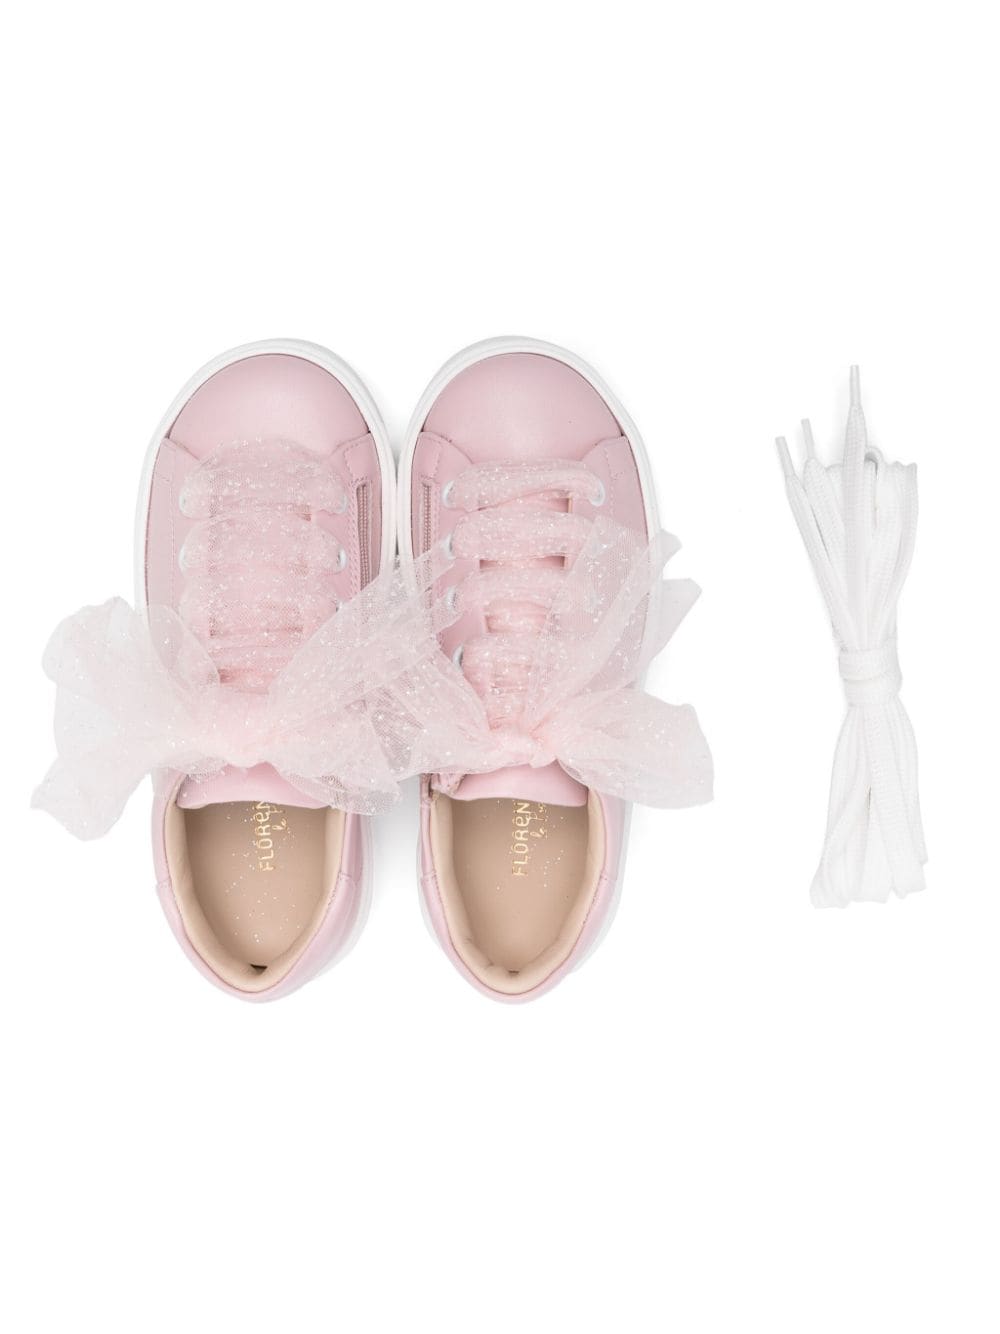 Sneakers rosa bambina